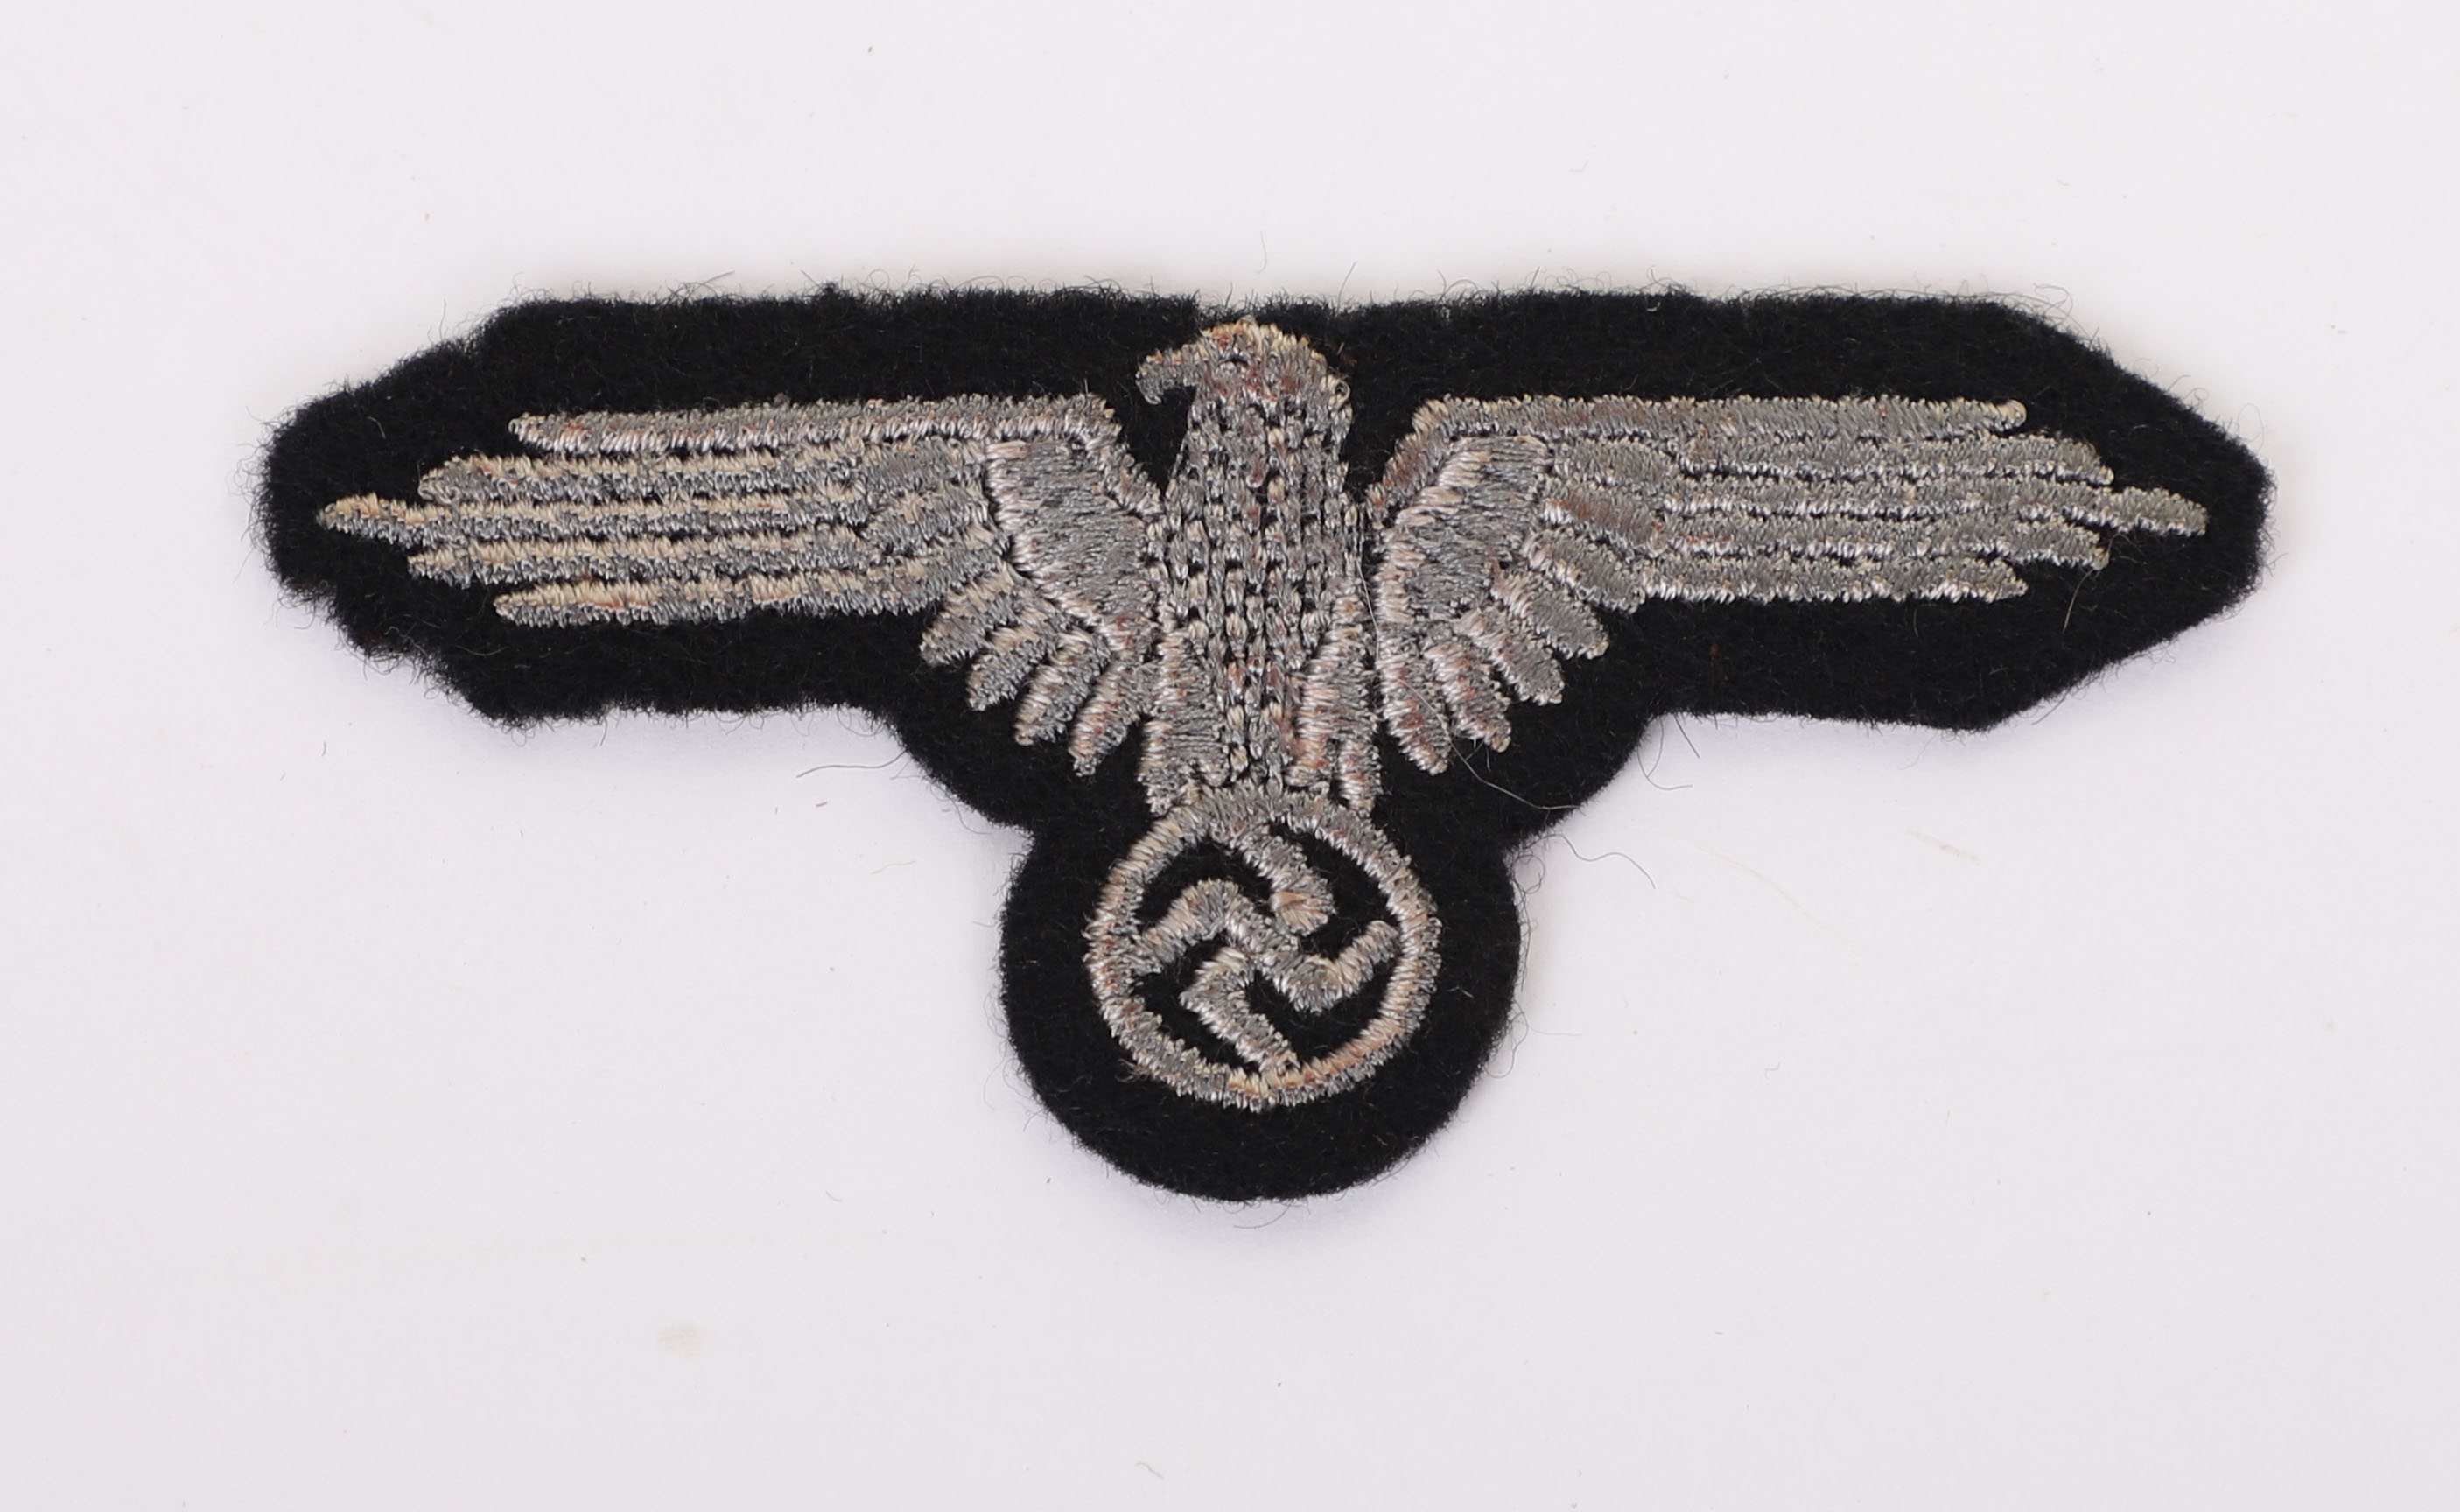 WW2 GERMAN WAFFEN-SS SLEEVE EAGLE - Image 3 of 4